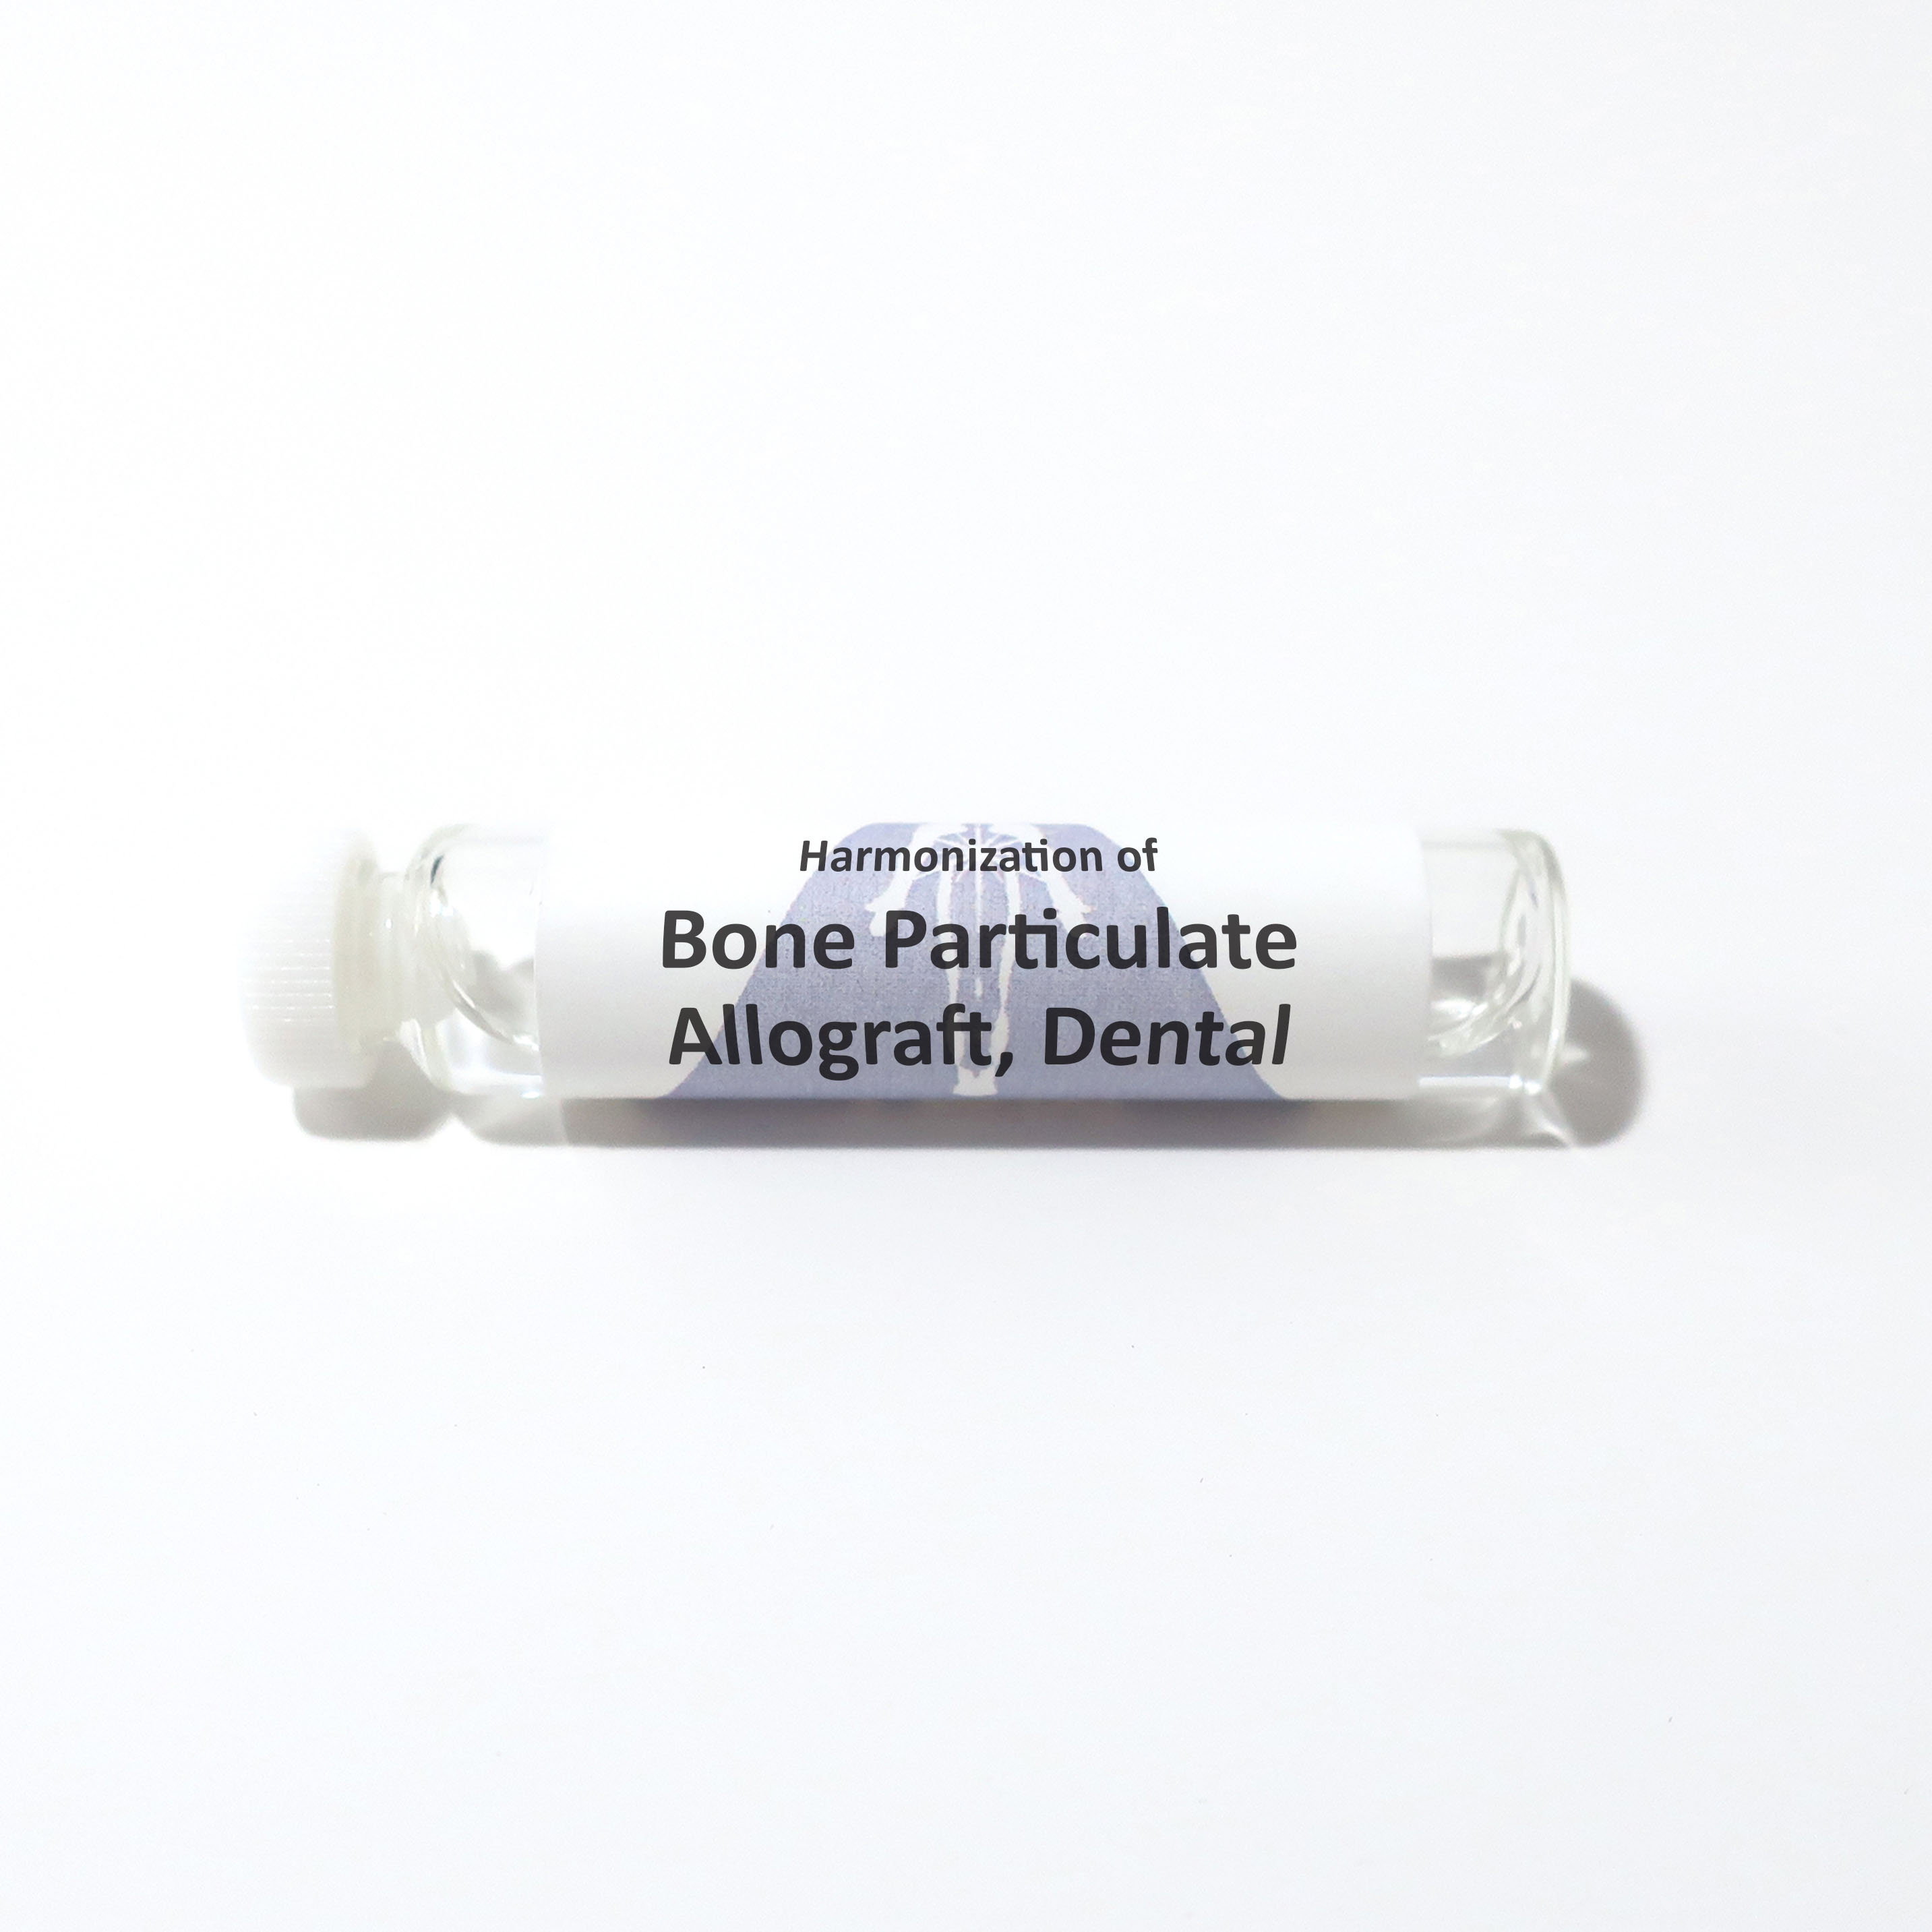 Bone Particulate Allograft, Dental (Creos Allo.gain)